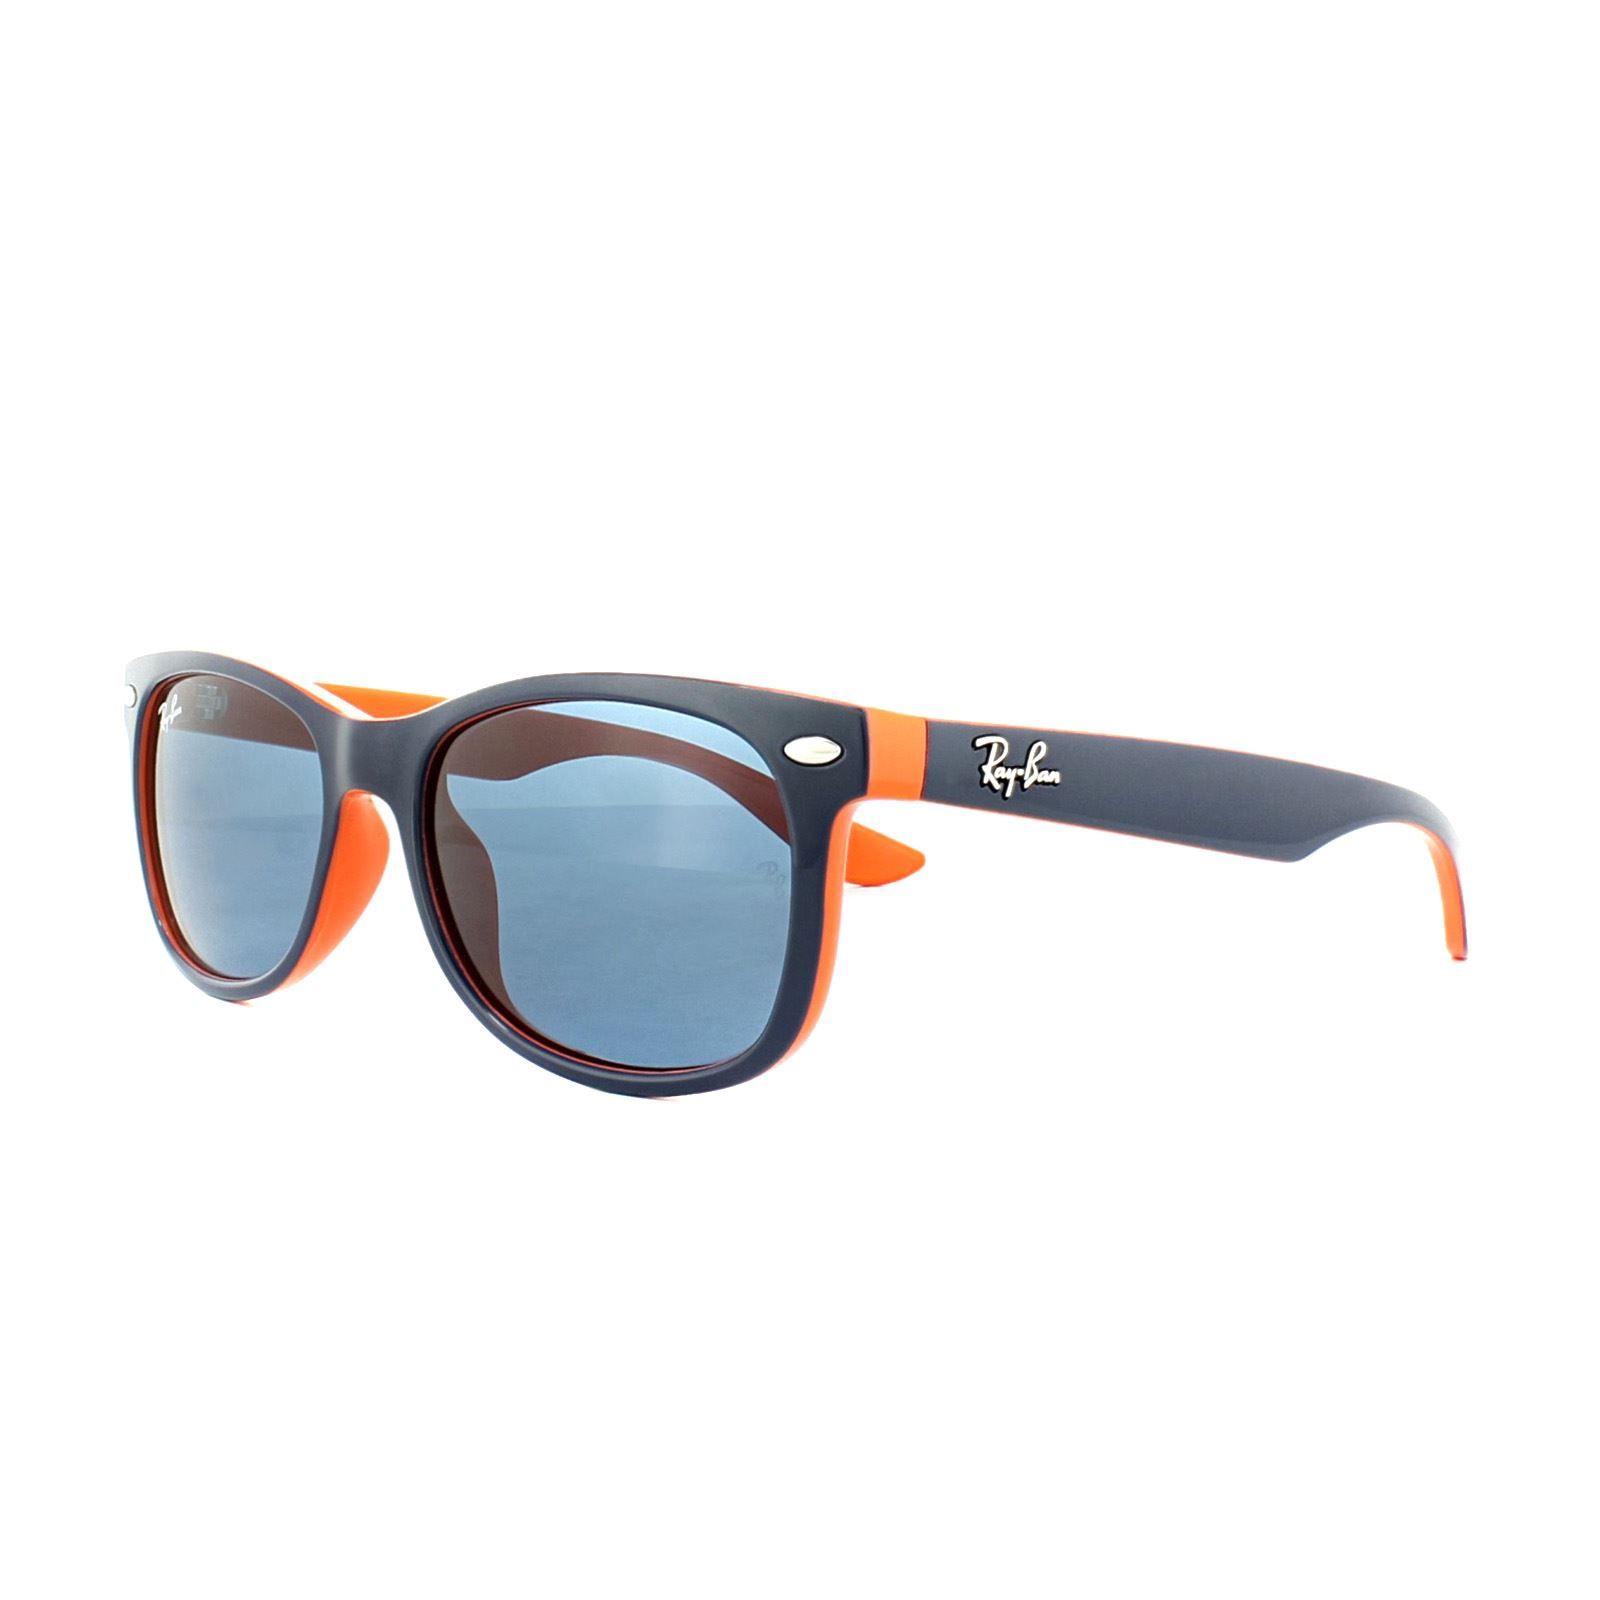 Ray-Ban Junior Sunglasses 9052 178/80 Dark Blue & Orange Blue